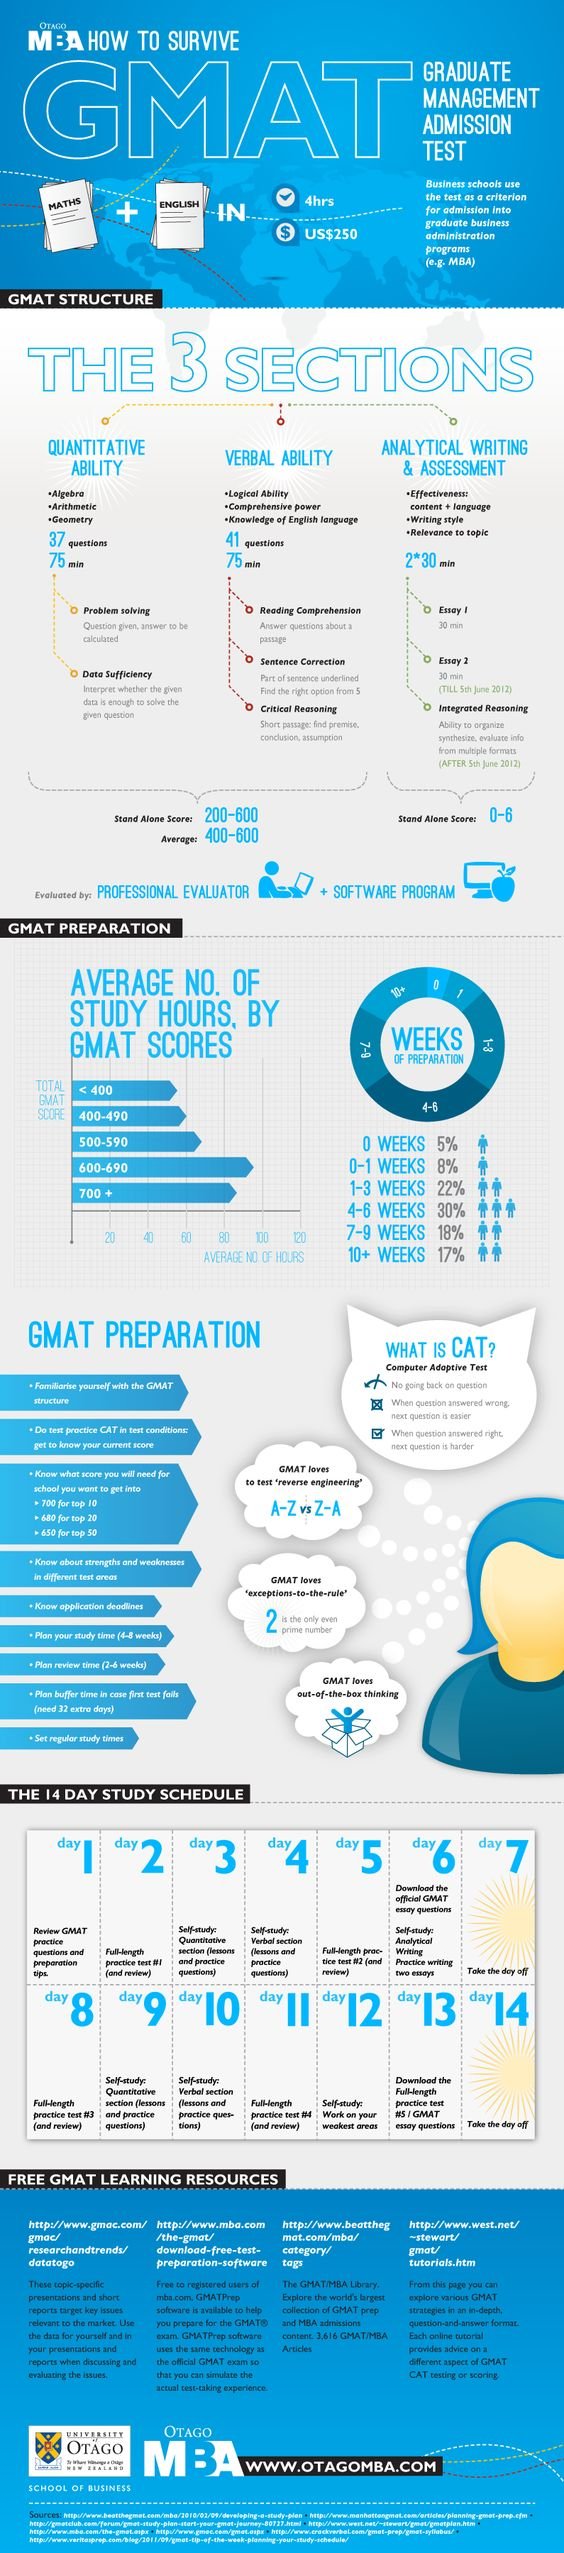 The GMAT Study Plan